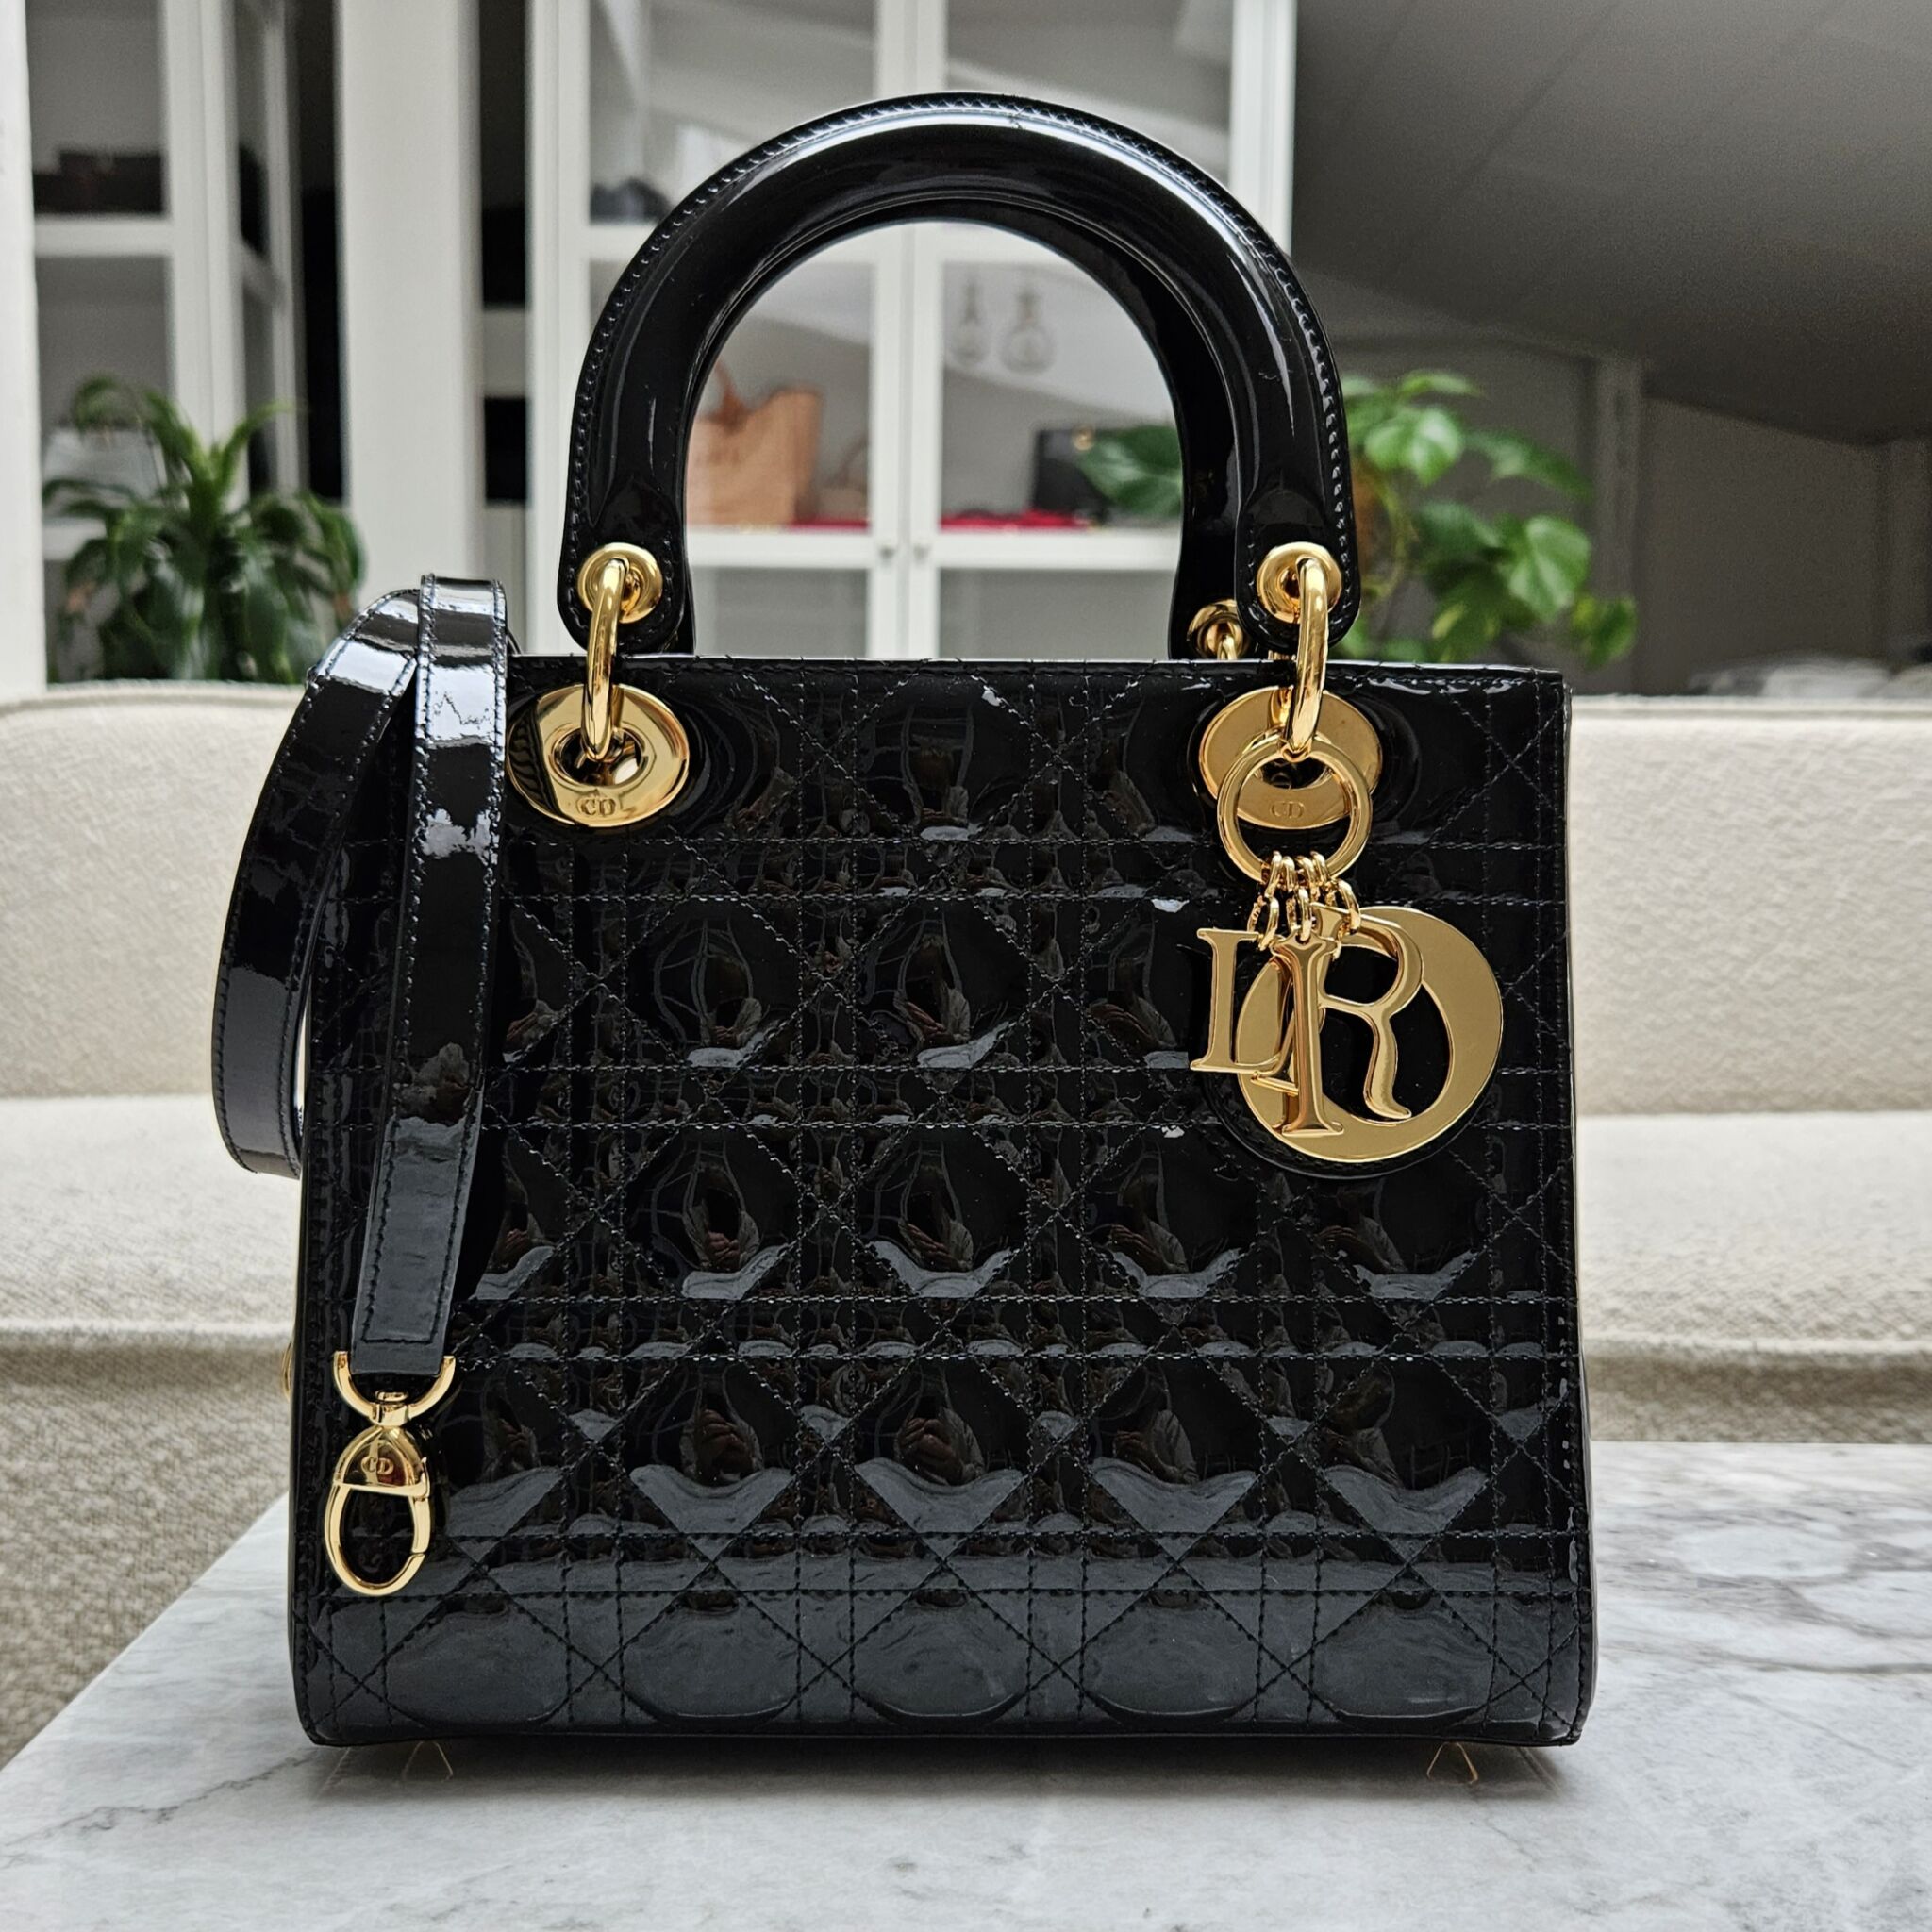 Christian Dior Patent Leather Handbags  Mercari